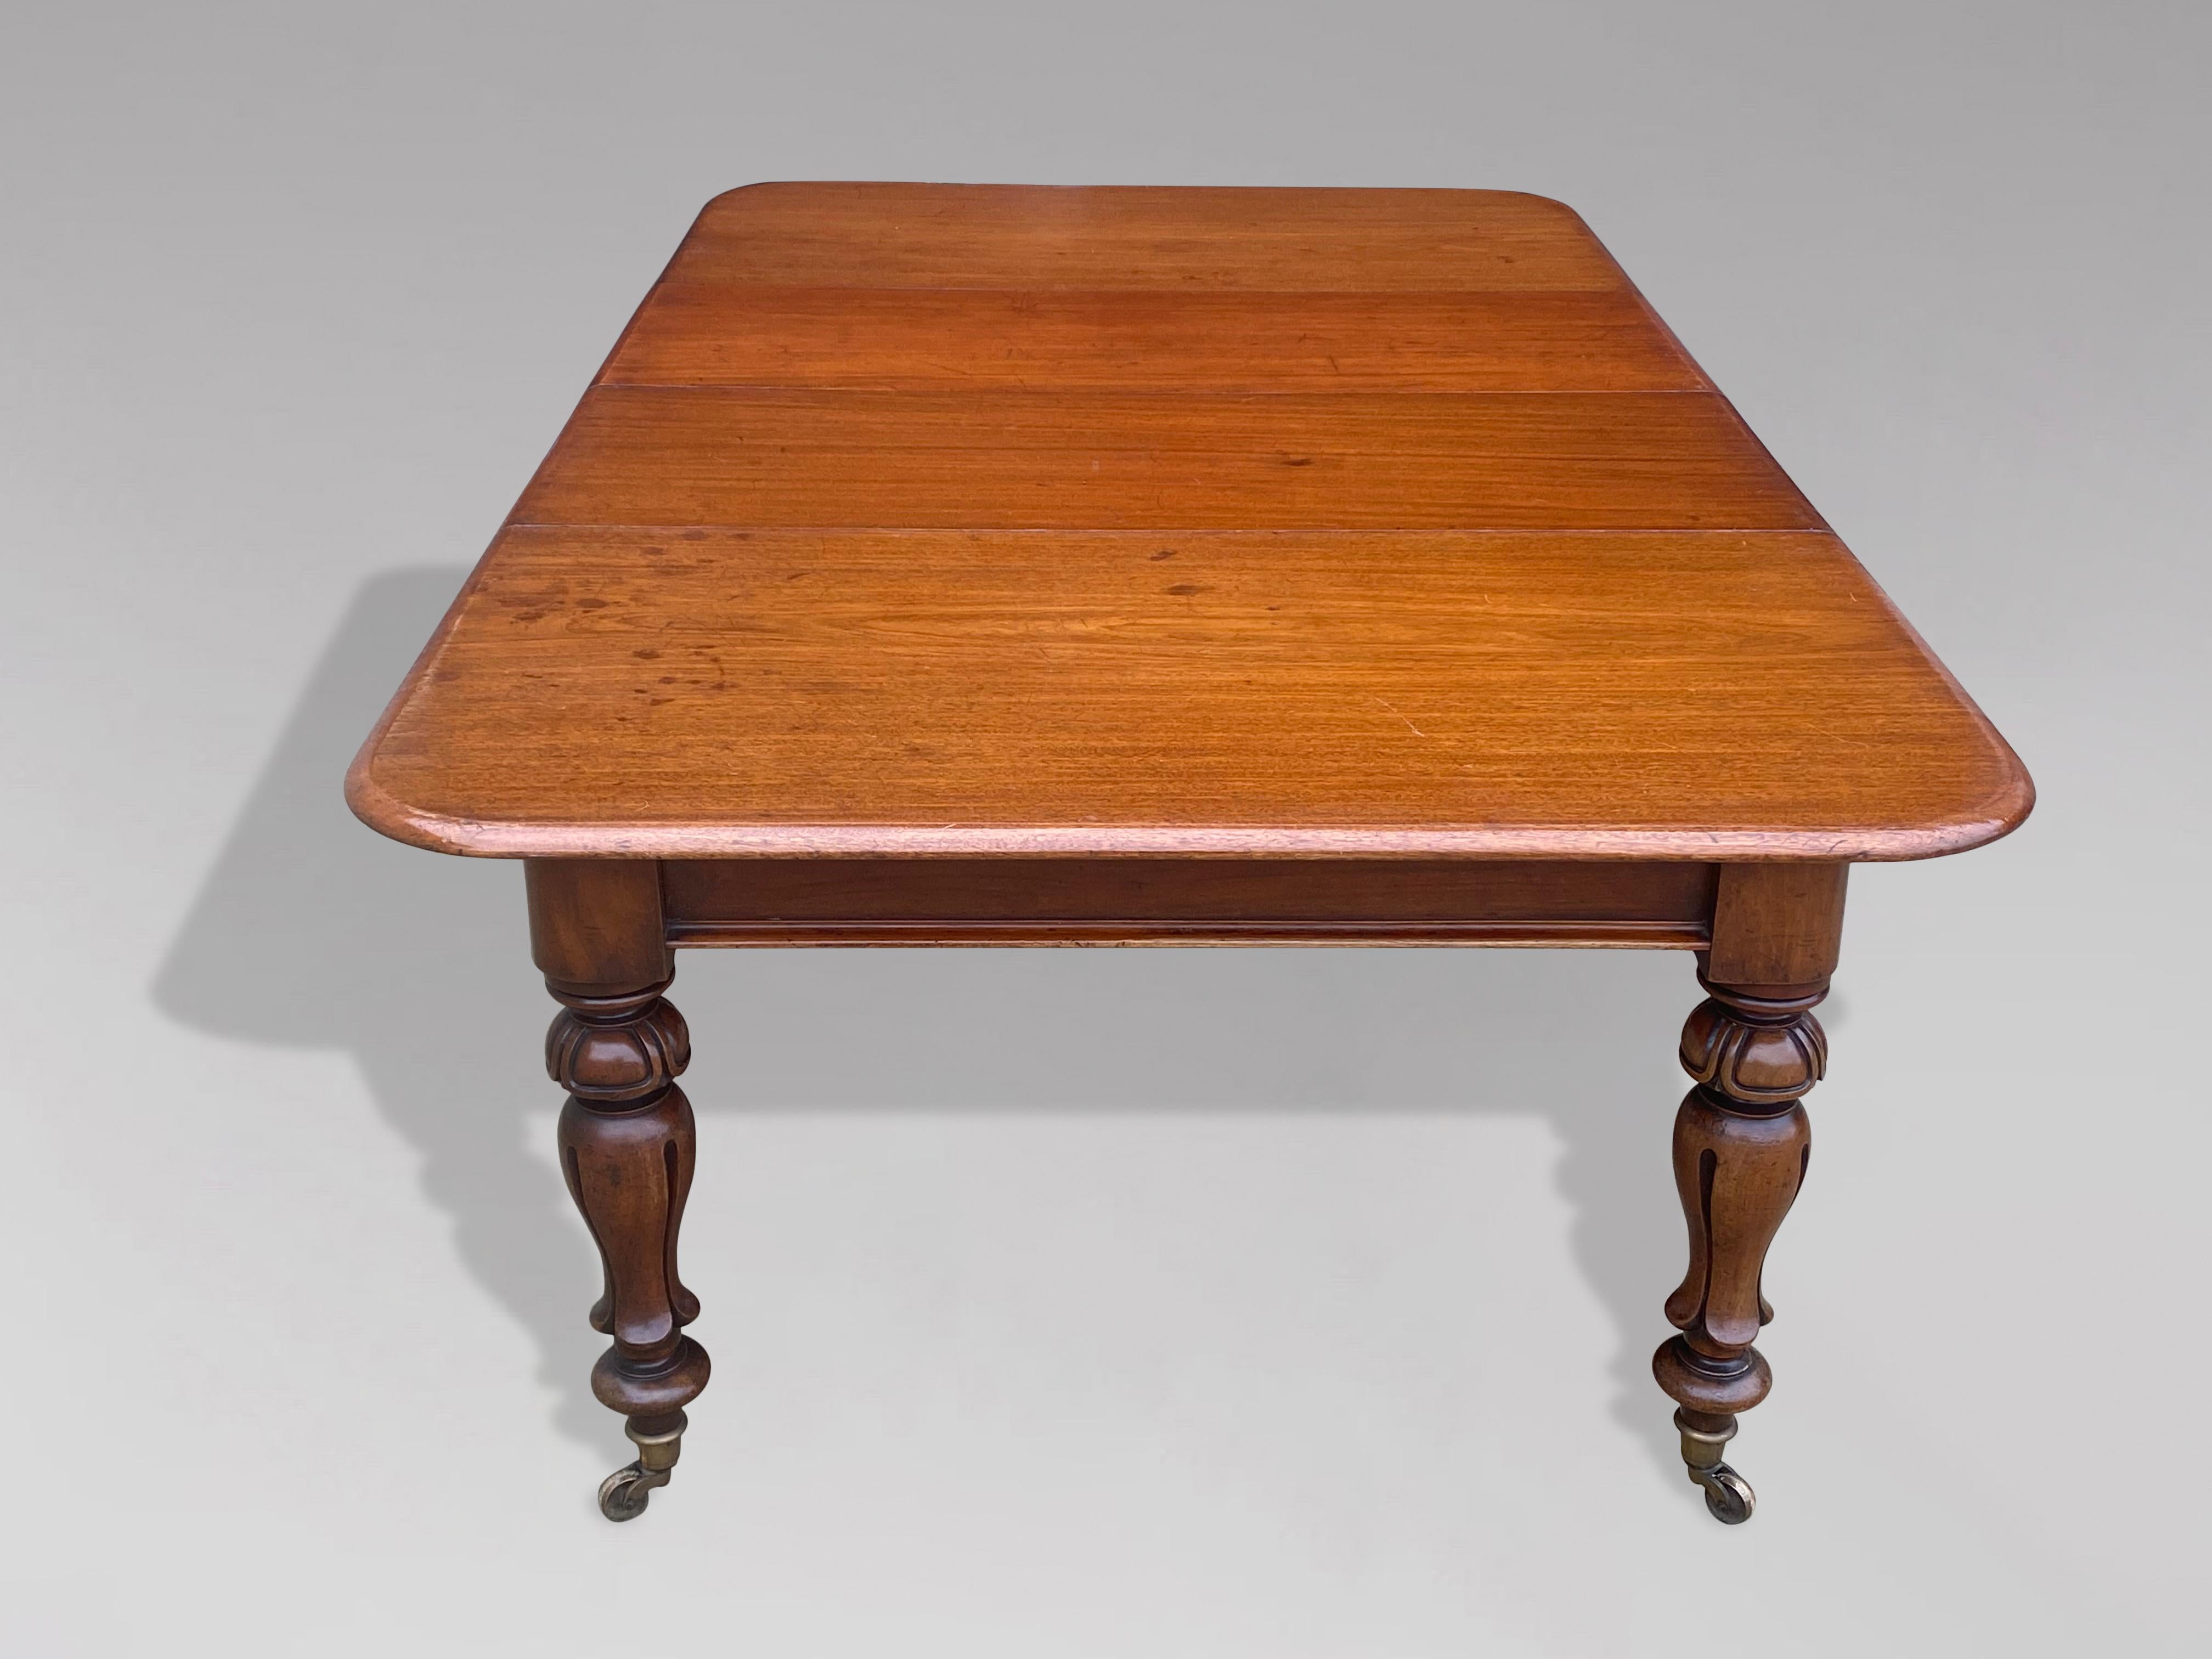 British 19th Century William IV Period Mahogany Dining Table For Sale